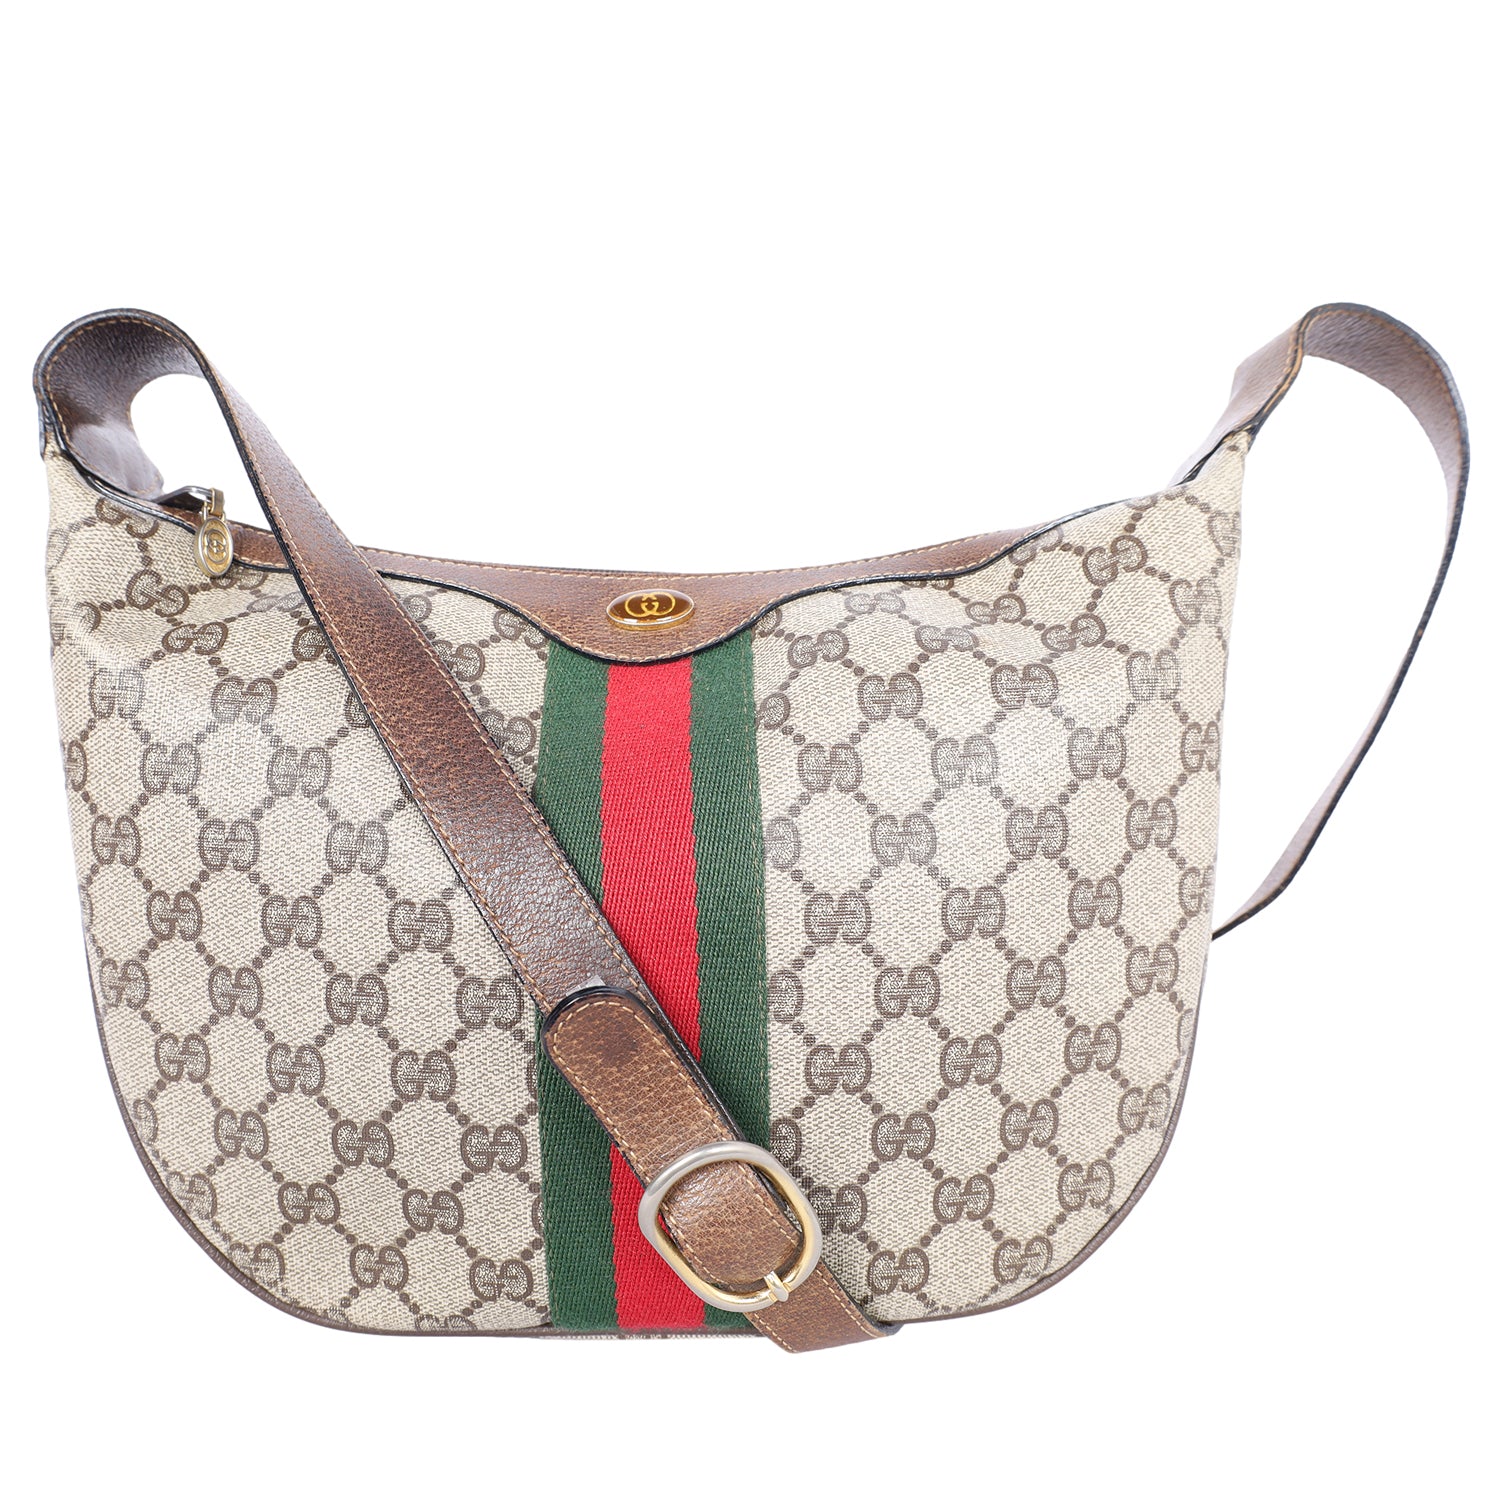 Gucci Ophidia GG Small Messenger Bag Beige/Ebony in Supreme Canvas